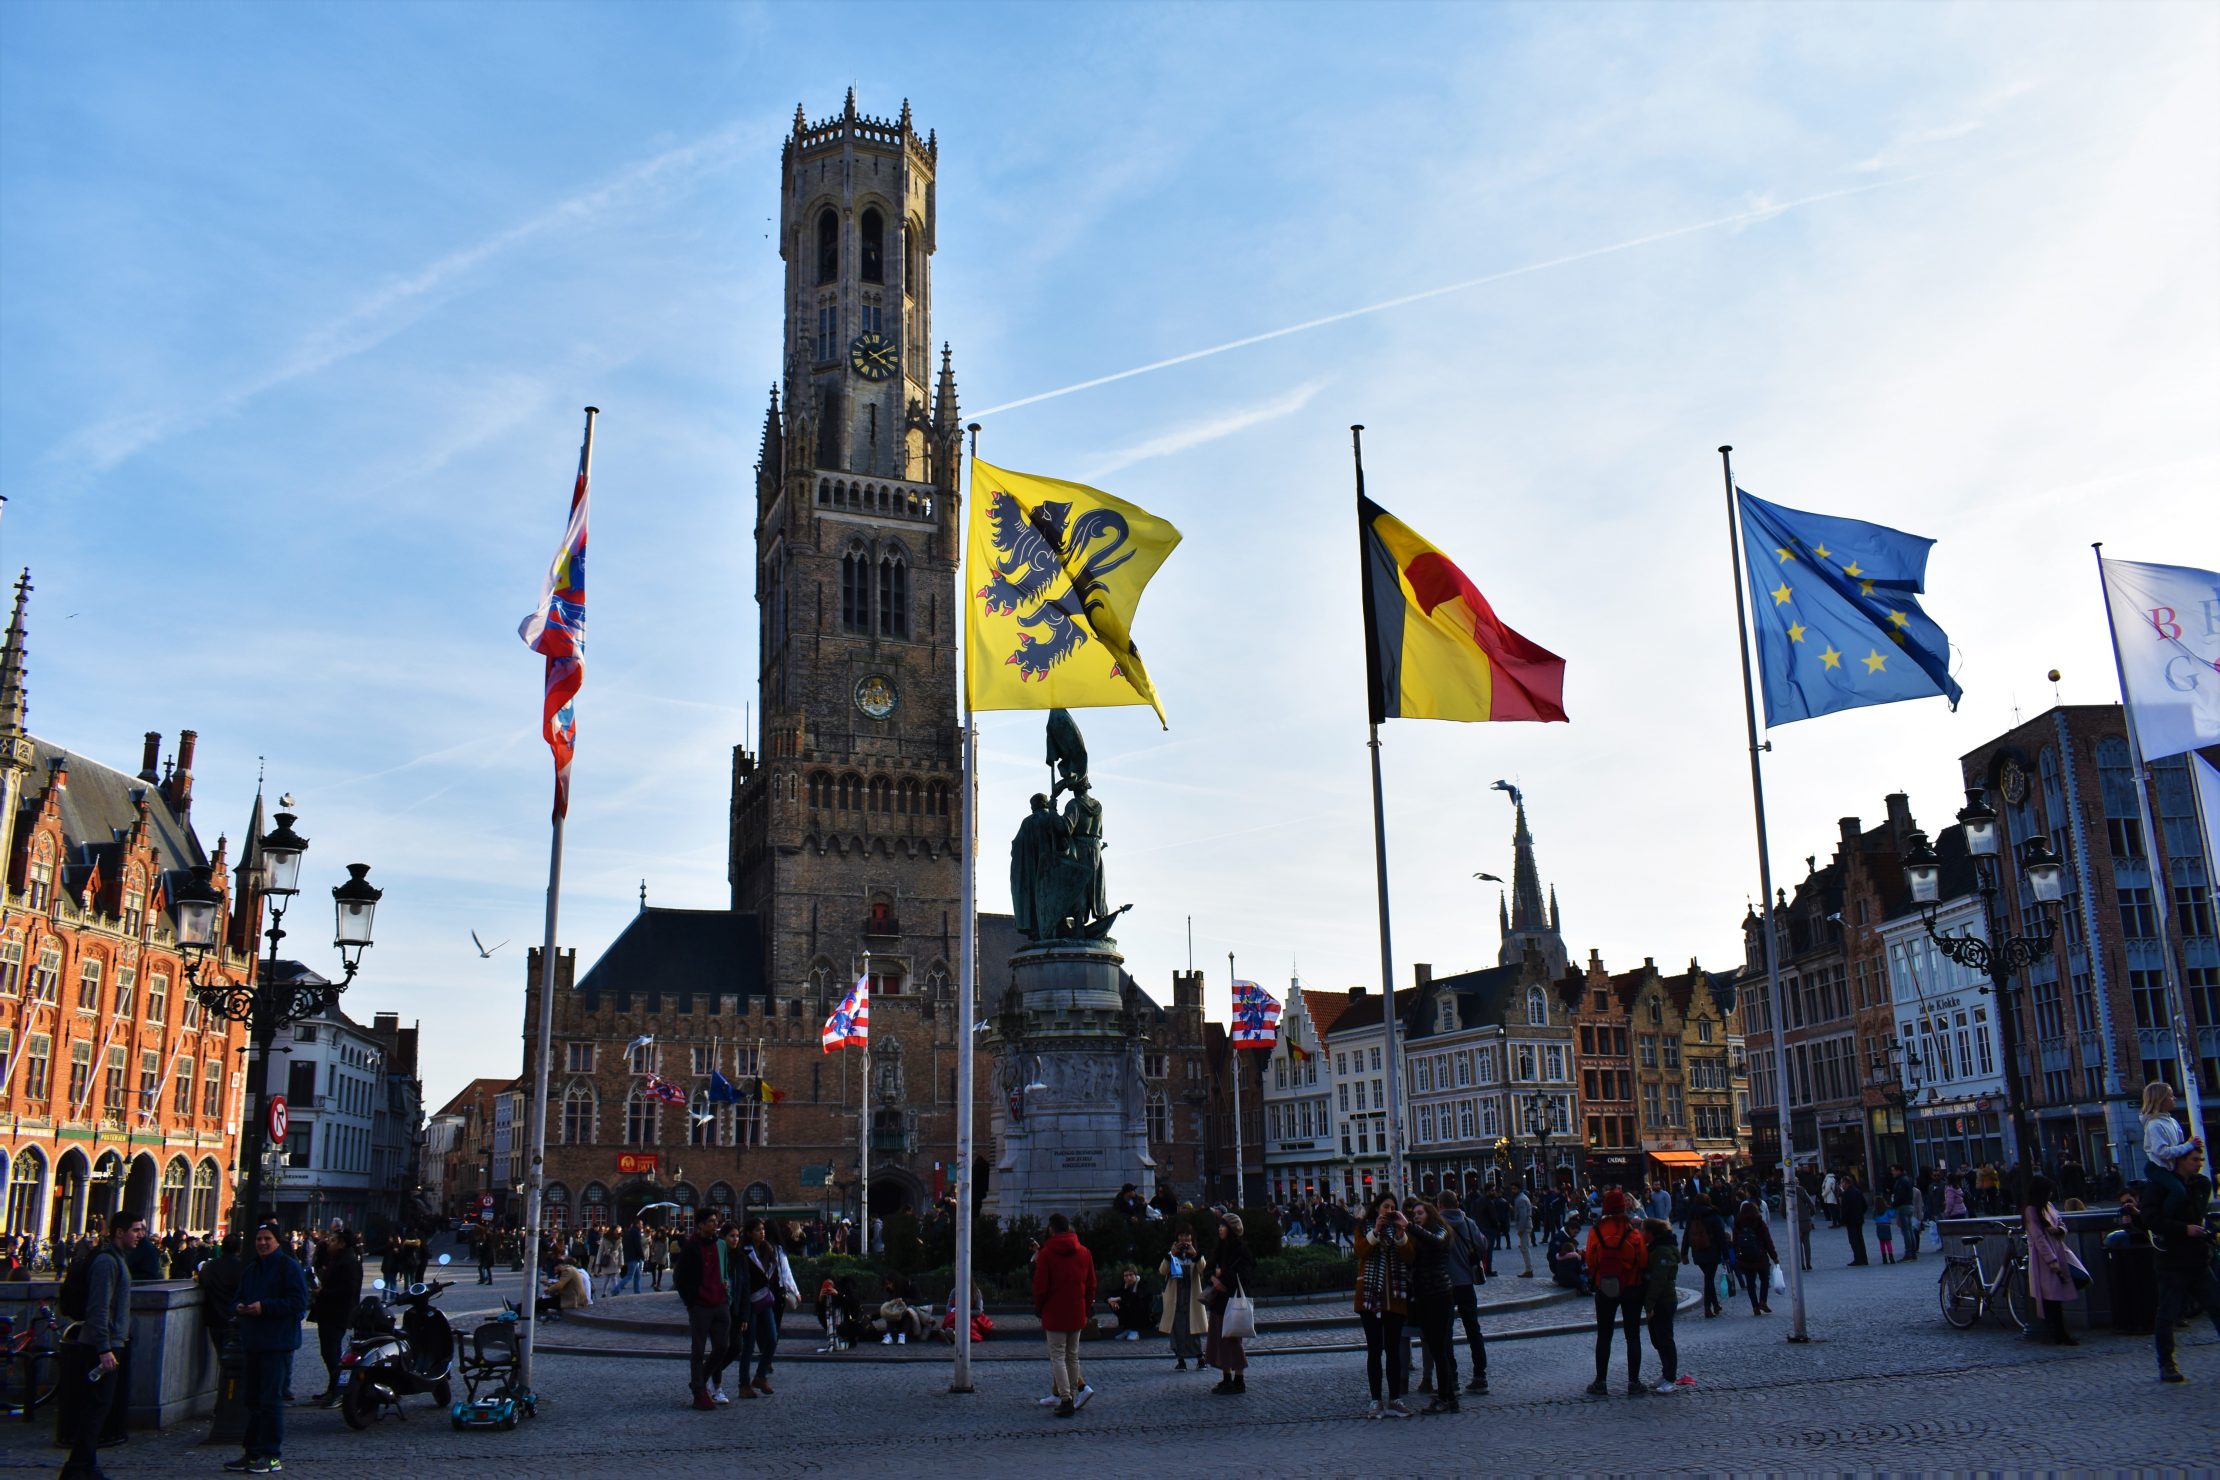 The Belfry of Bruges on the Markt - Bruges top attractions